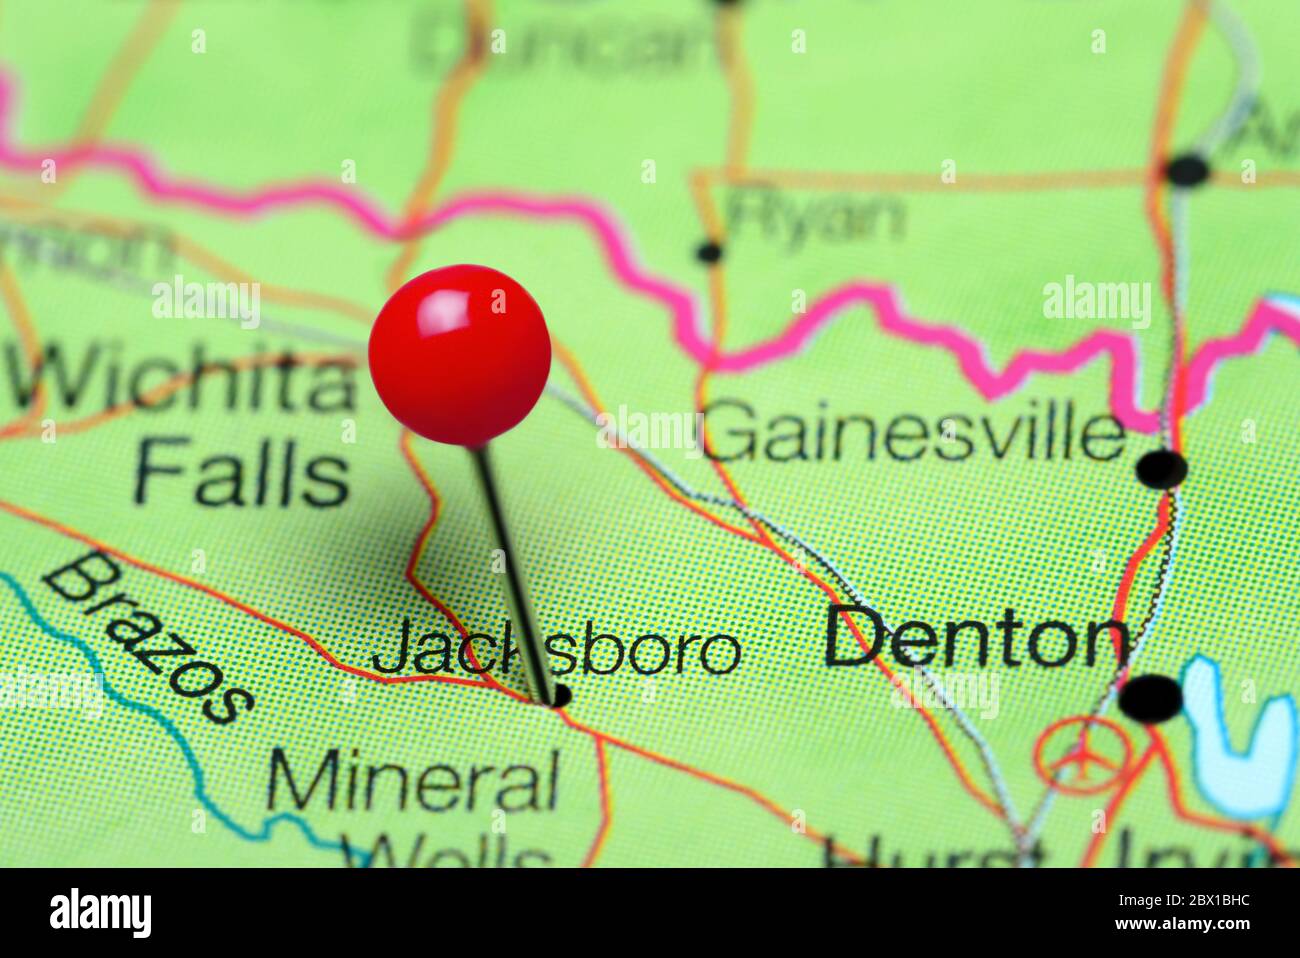 Jacksboro pinned on a map of Texas, USA Stock Photo